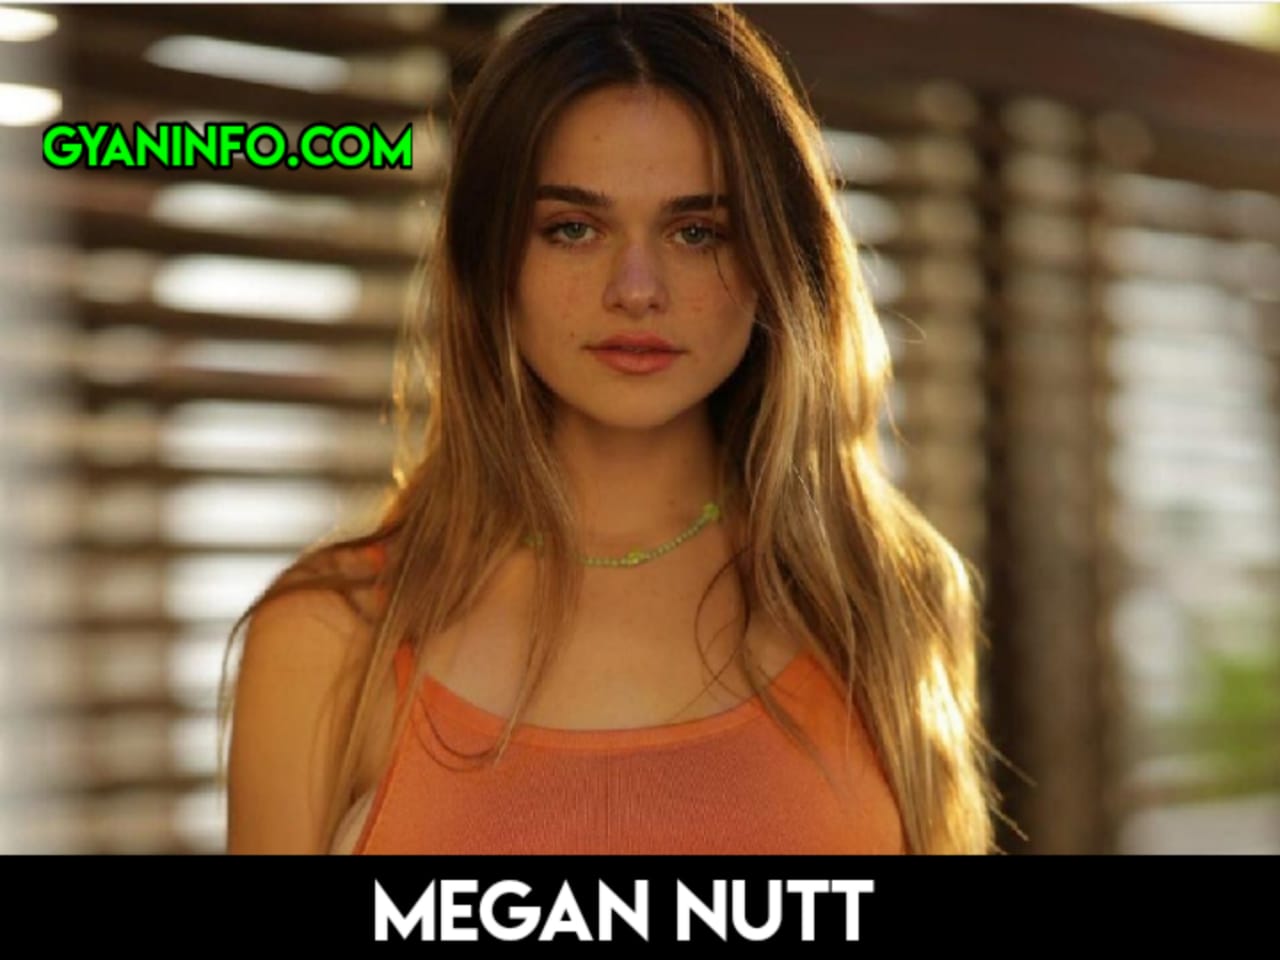 Megan Nutt (MegNutt02) Biography, Height, Age, Weight, Body Measurements, Family, Boyfriend, Bio, Net Worth, Wiki & More